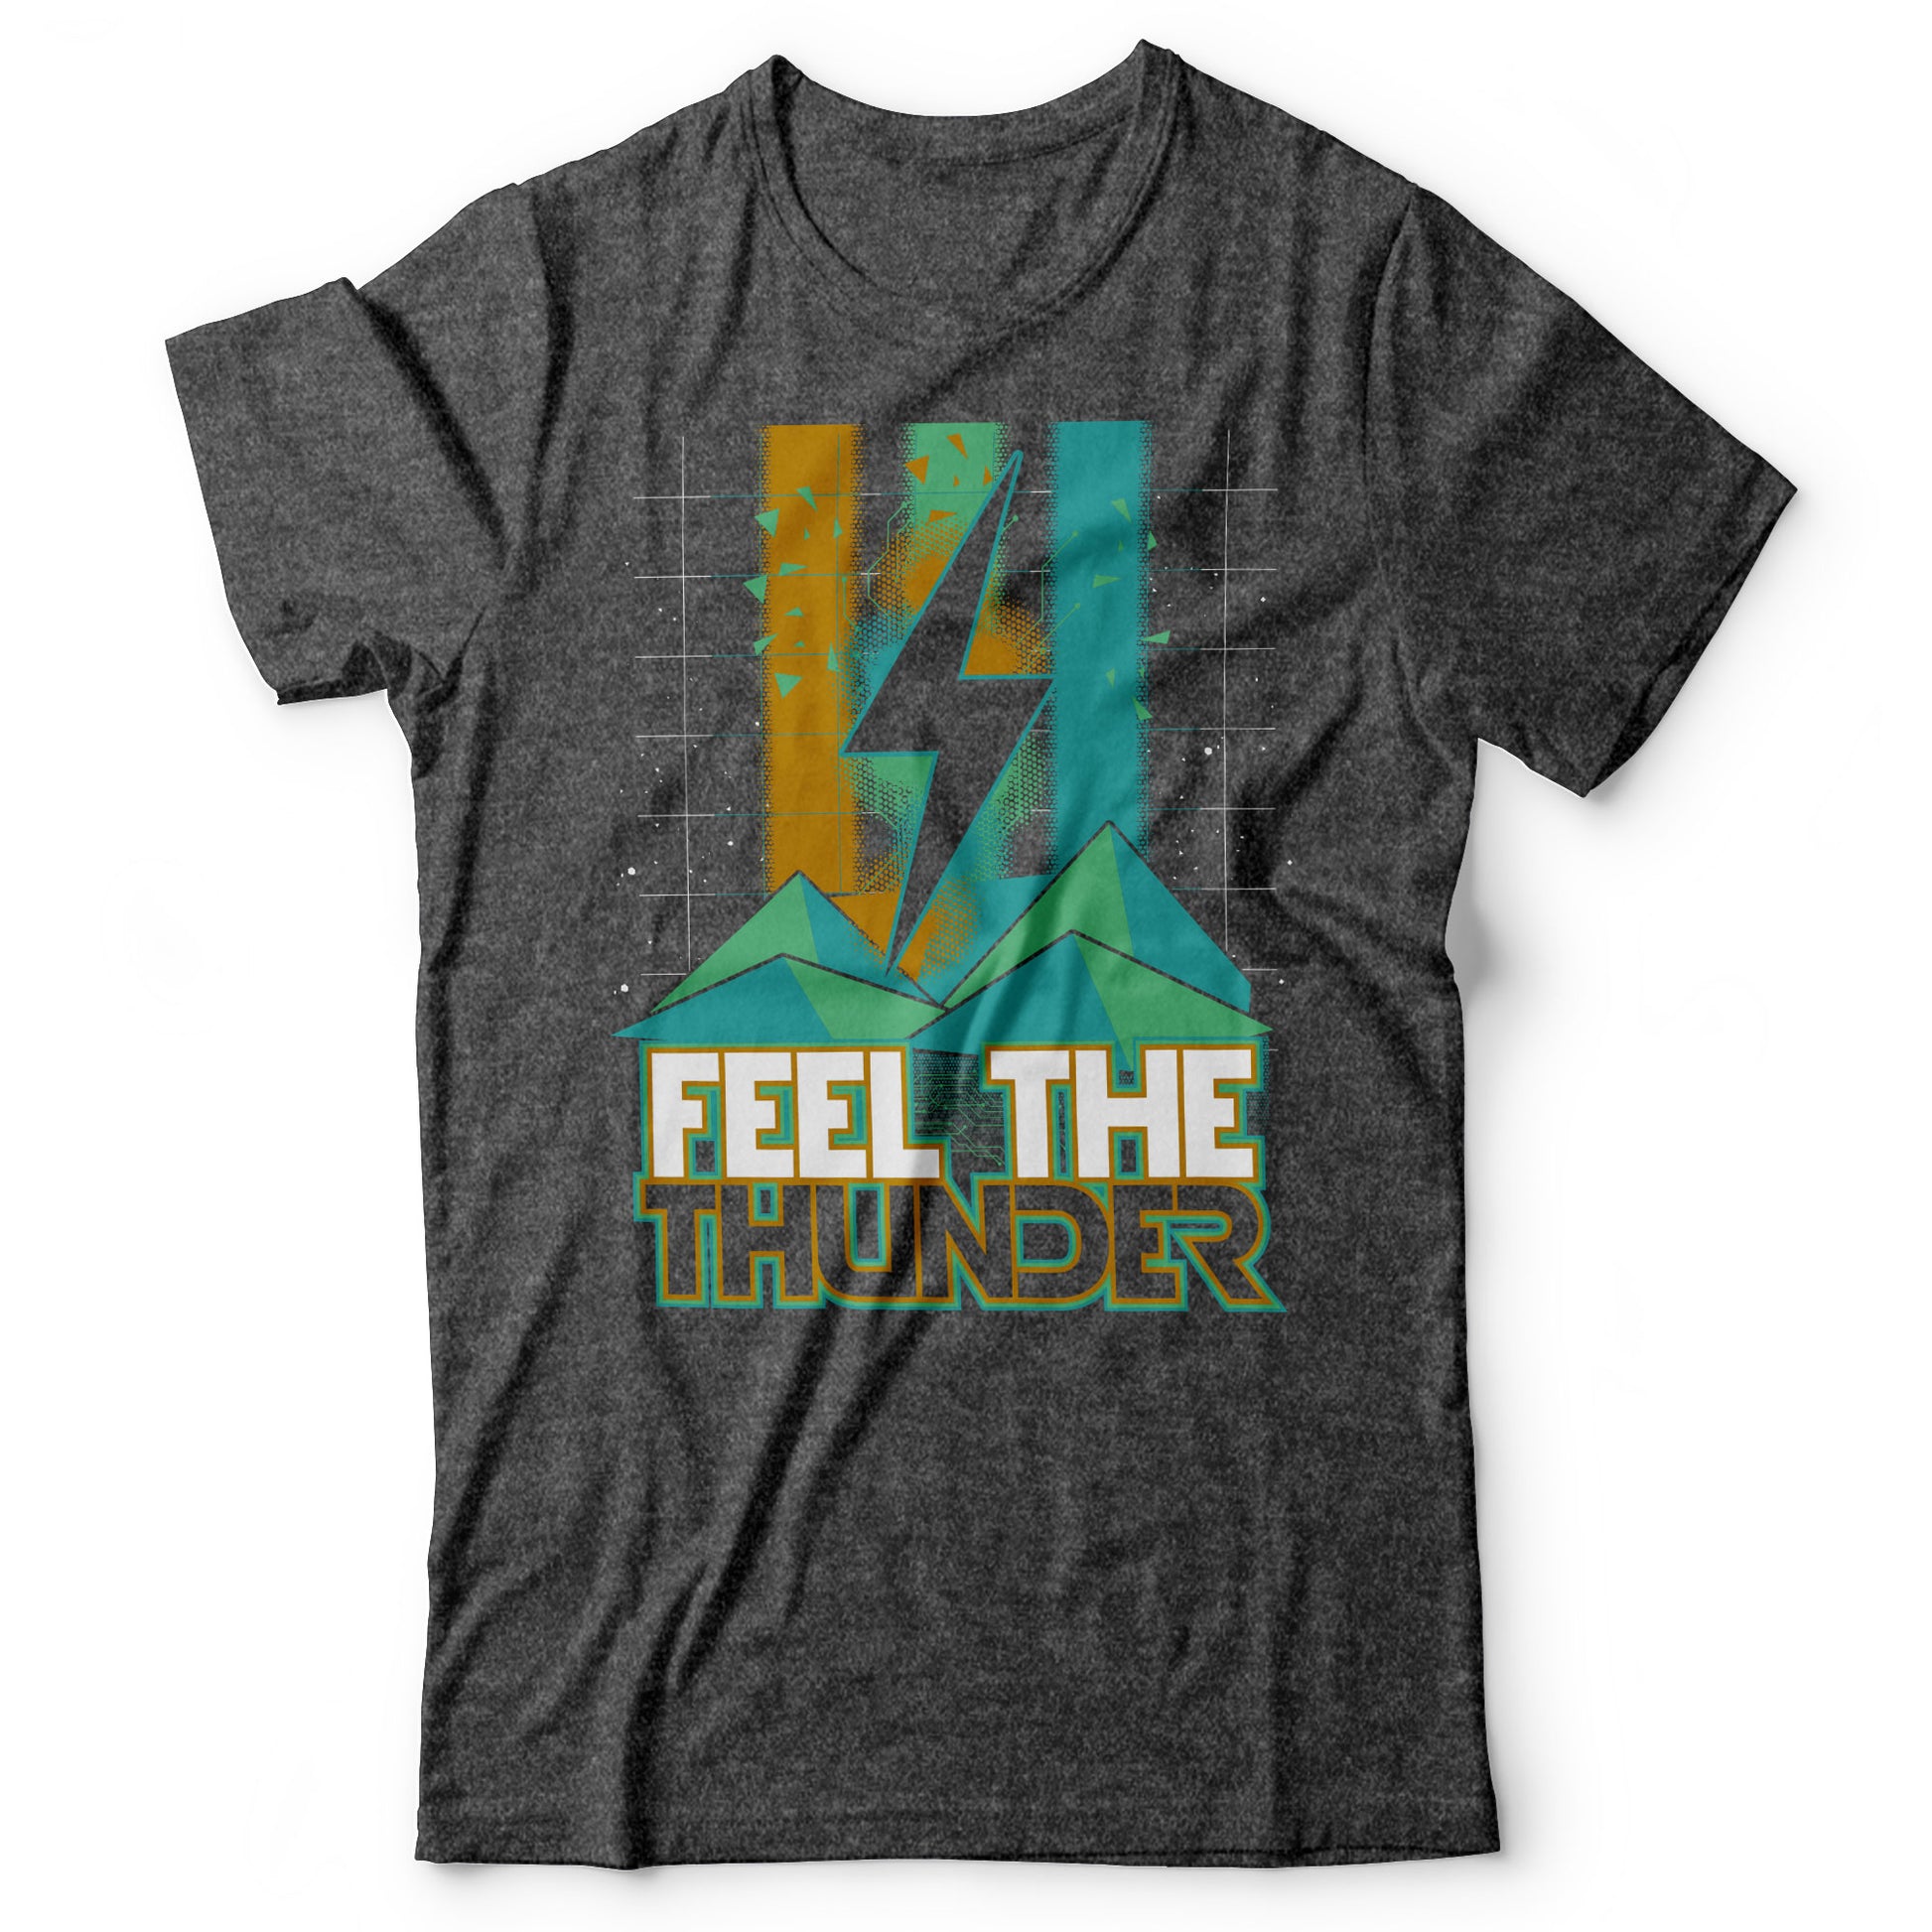 Imagine Dragons - Thunder - Men's T-shirt Dark Heather